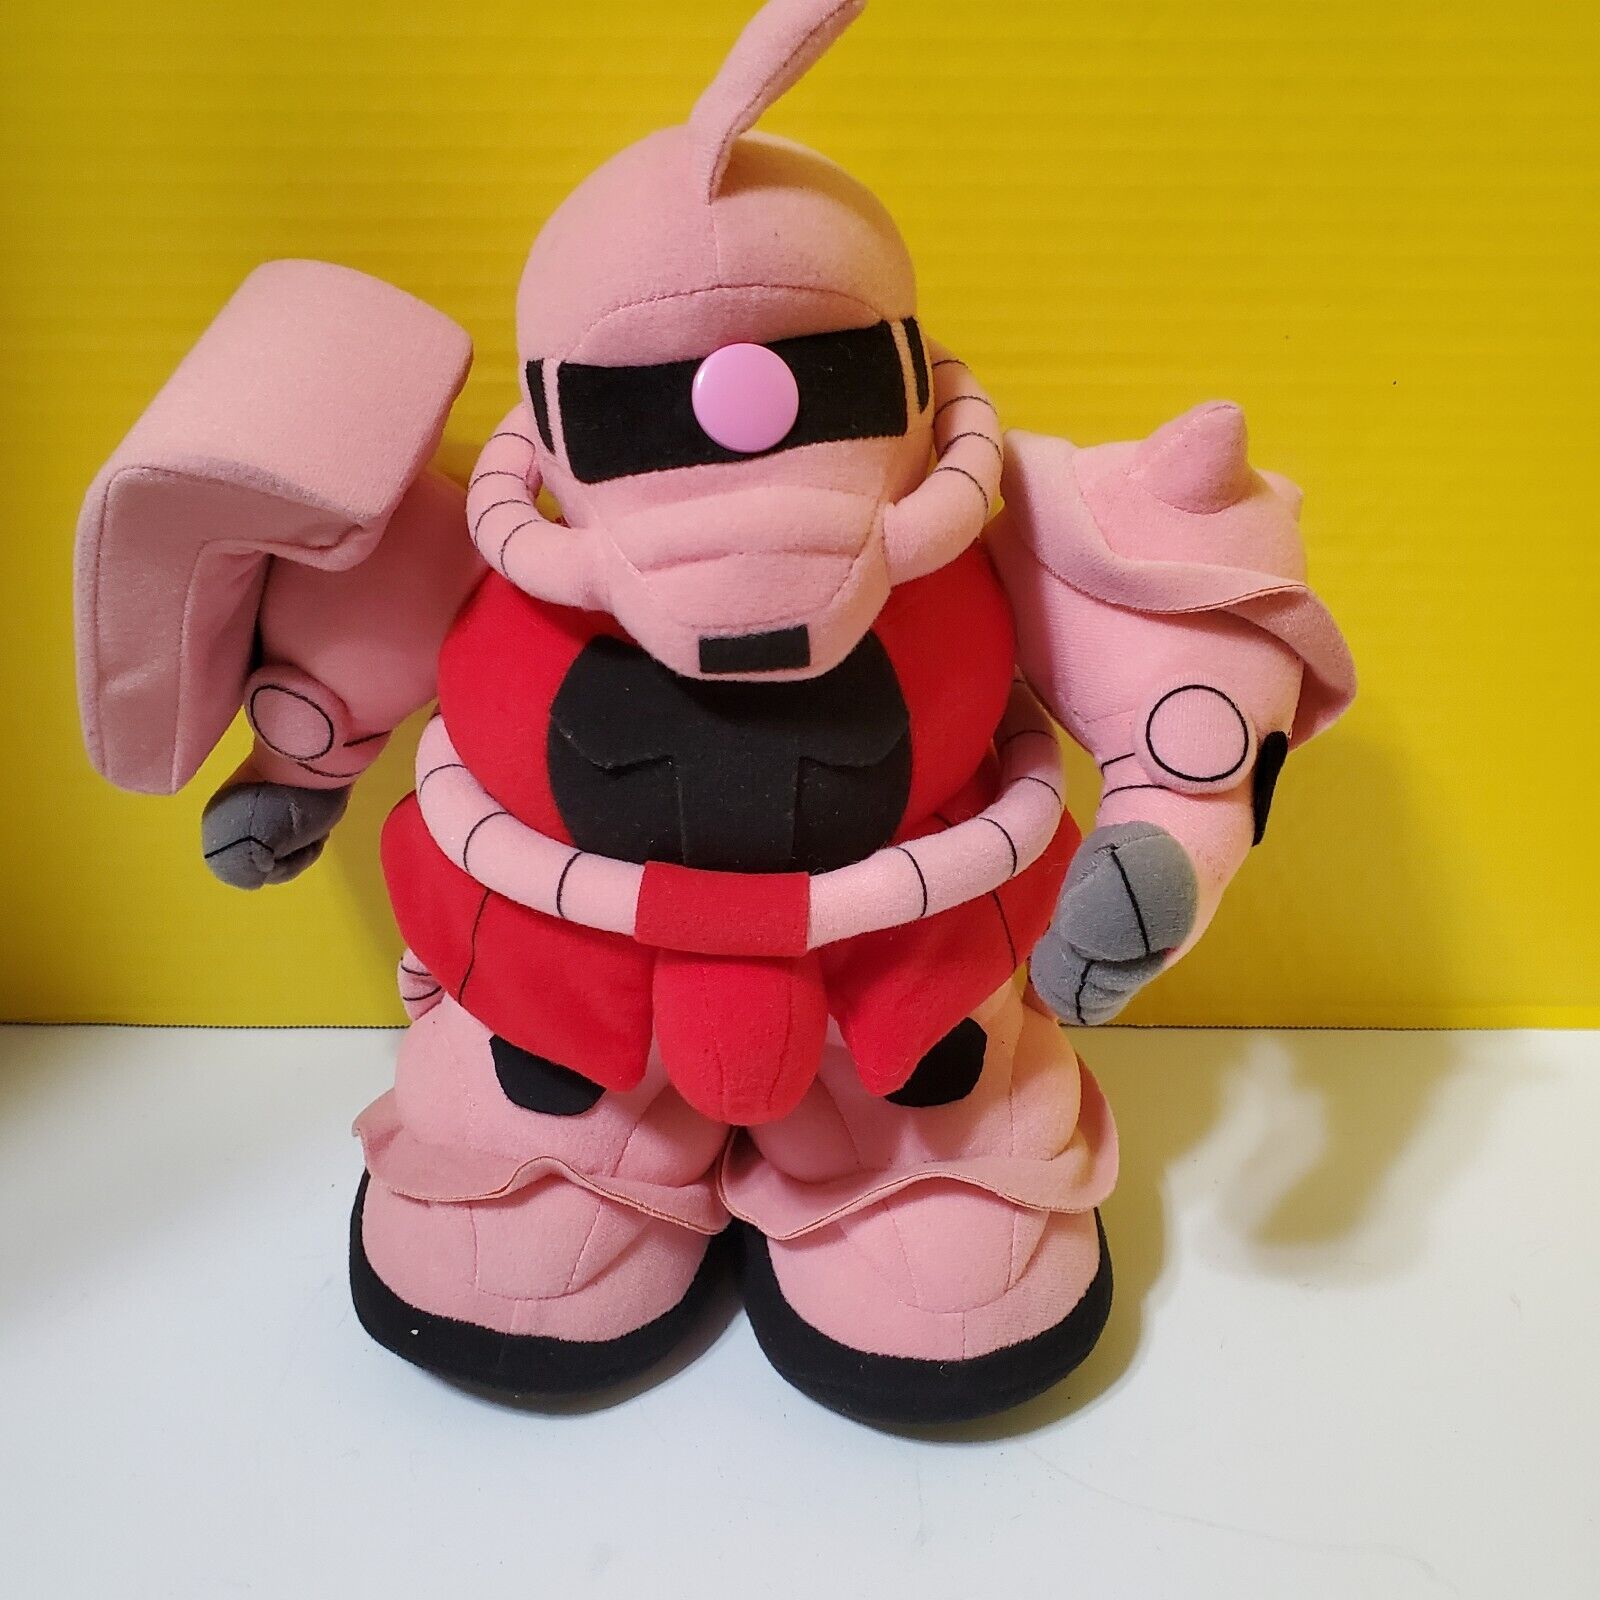 Banpresto Gundam Pink Toy Plush Rare